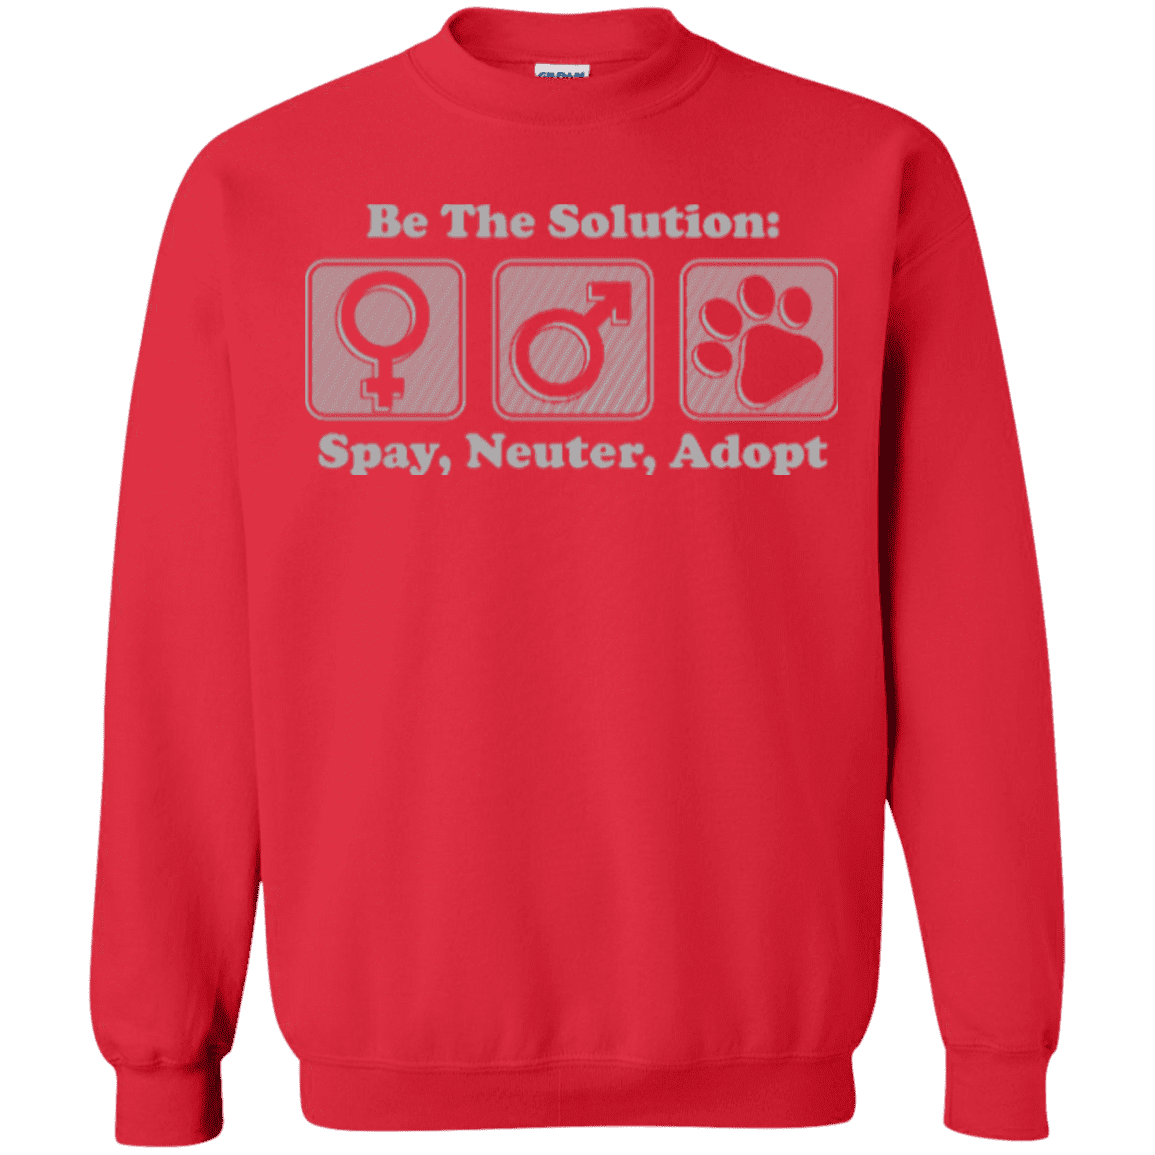 Be The Solution - Sweatshirt.